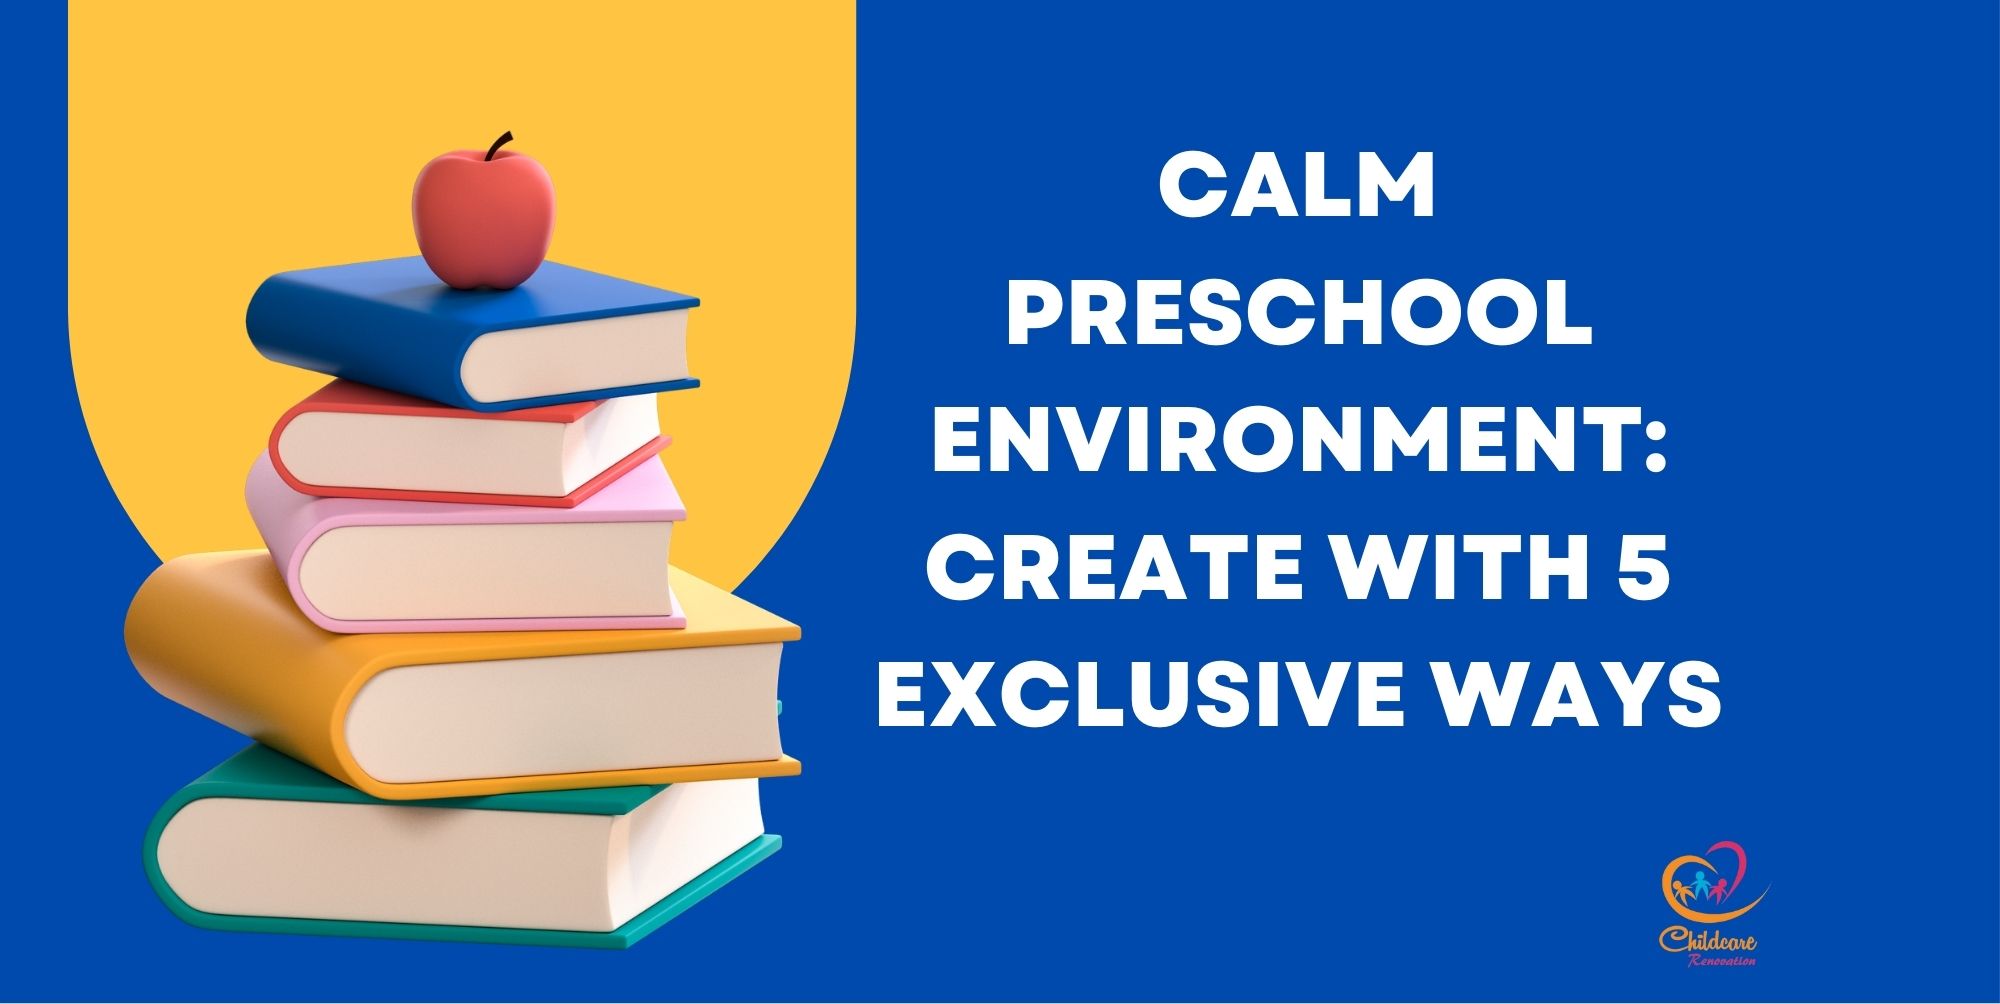 calm preschool environment